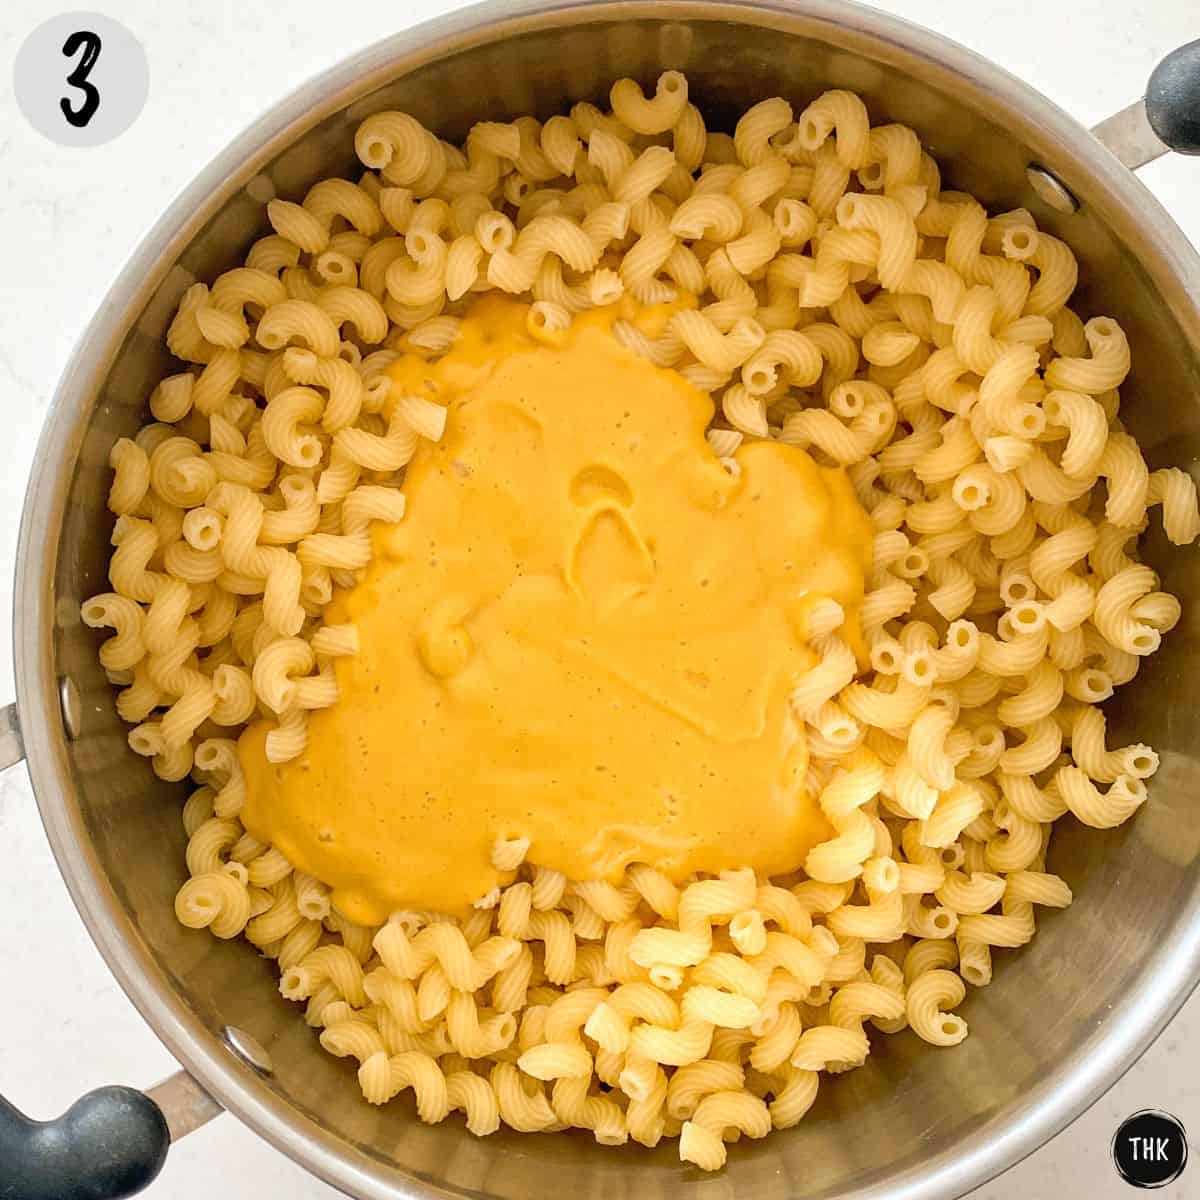 Macaroni pasta with orange sauce on top.